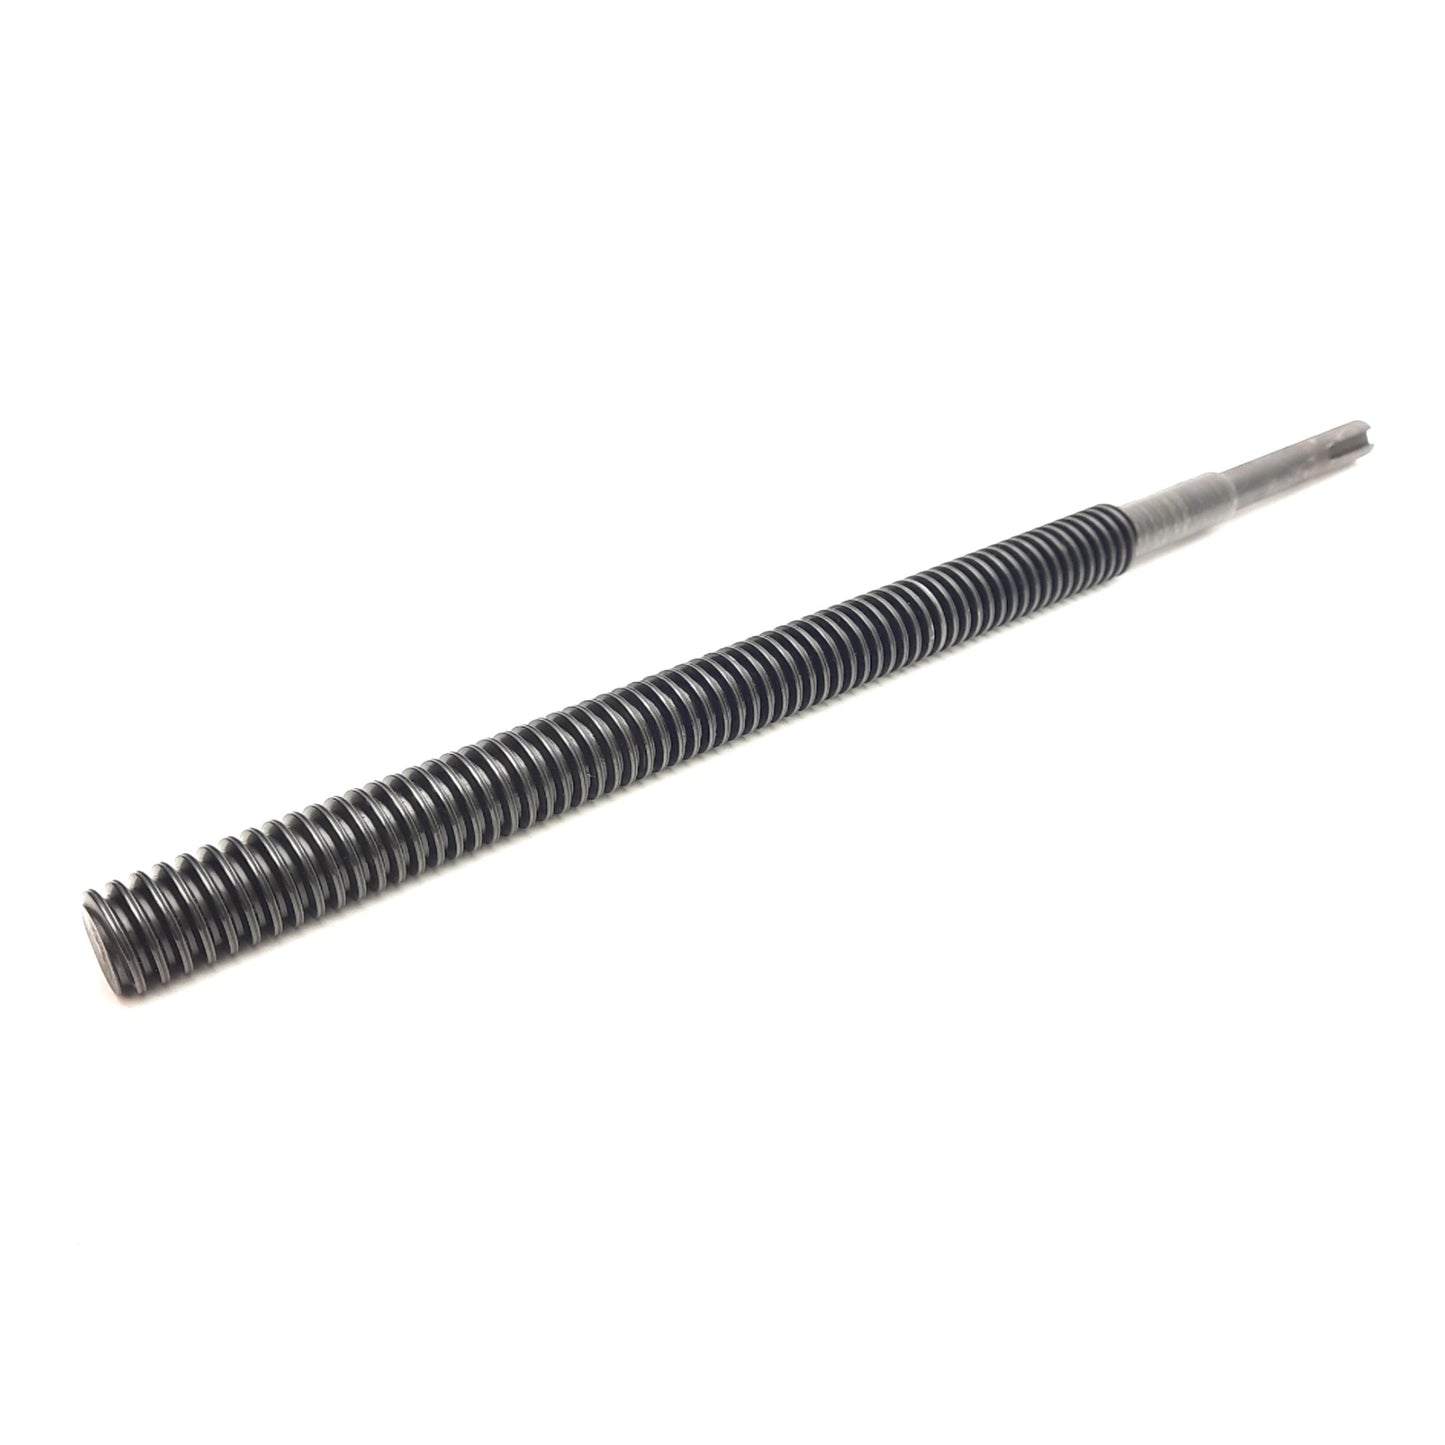 Misumi MTWBK20-375-S70 Lead Screw Shaft, Ø20mm Thread, 4mm Pitch, 375mm Length